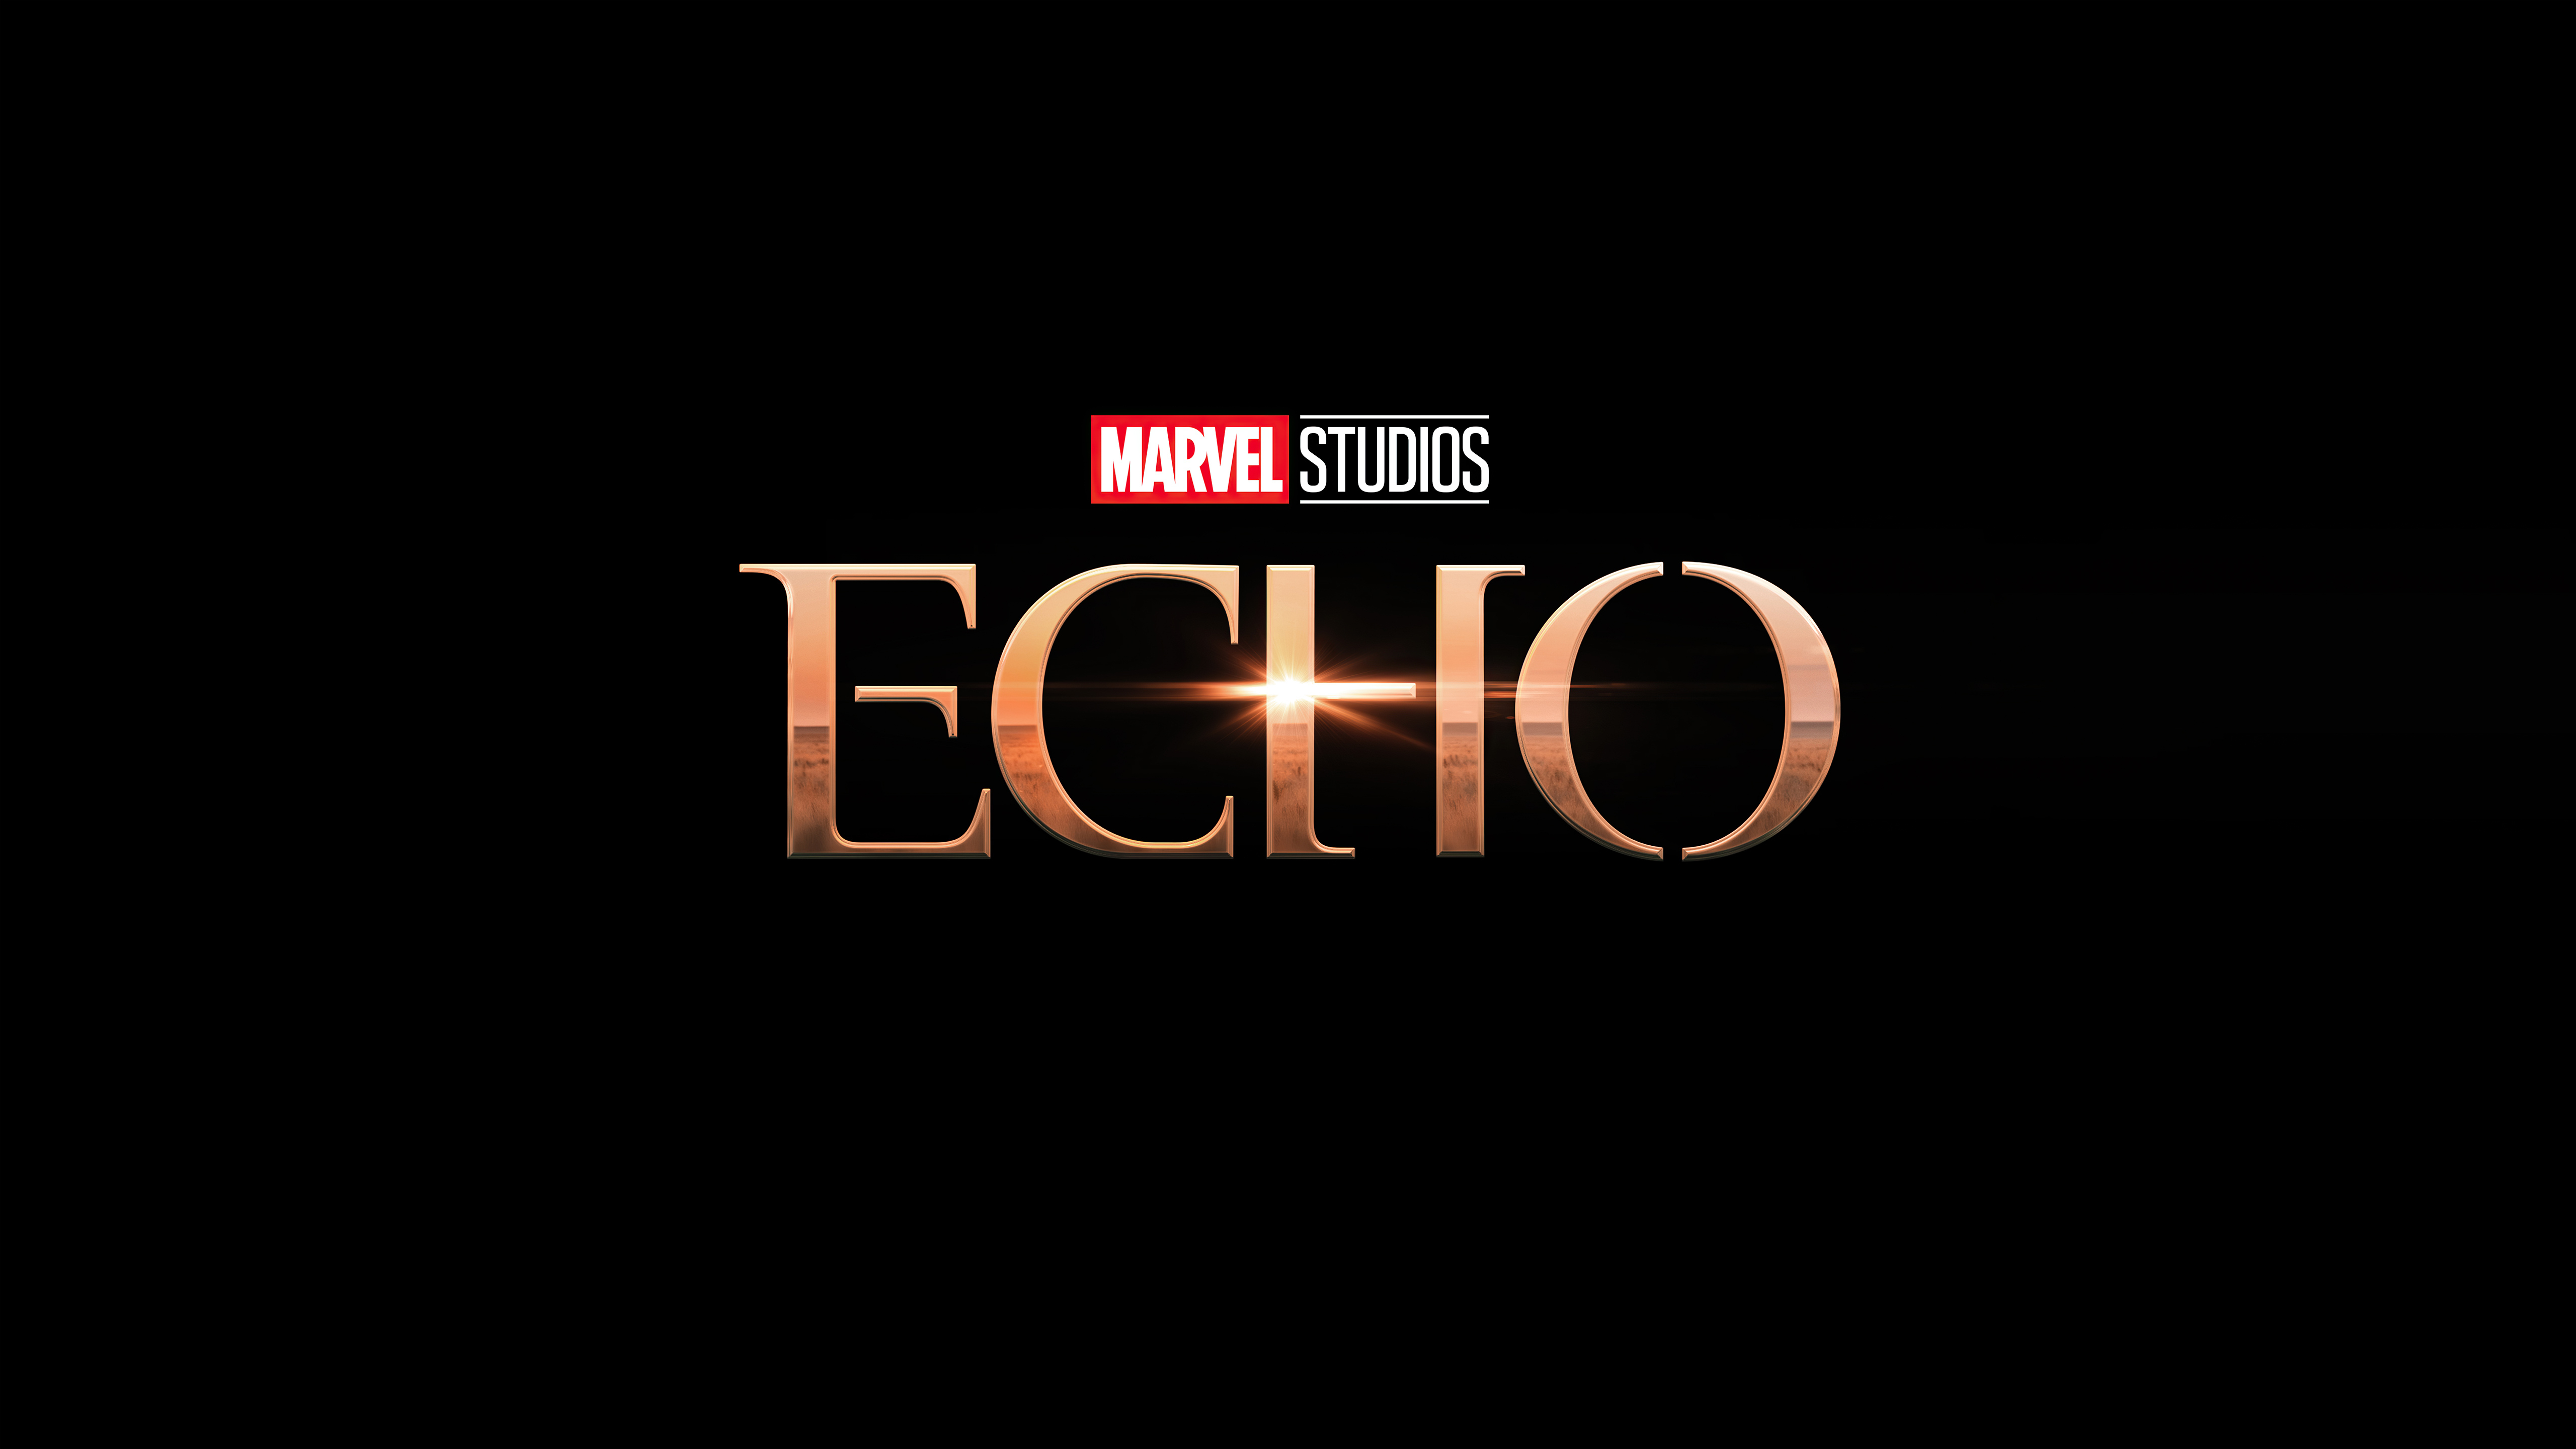 Echo 4k Marvel Disney Poster Wallpaper, HD TV Series 4K Wallpapers